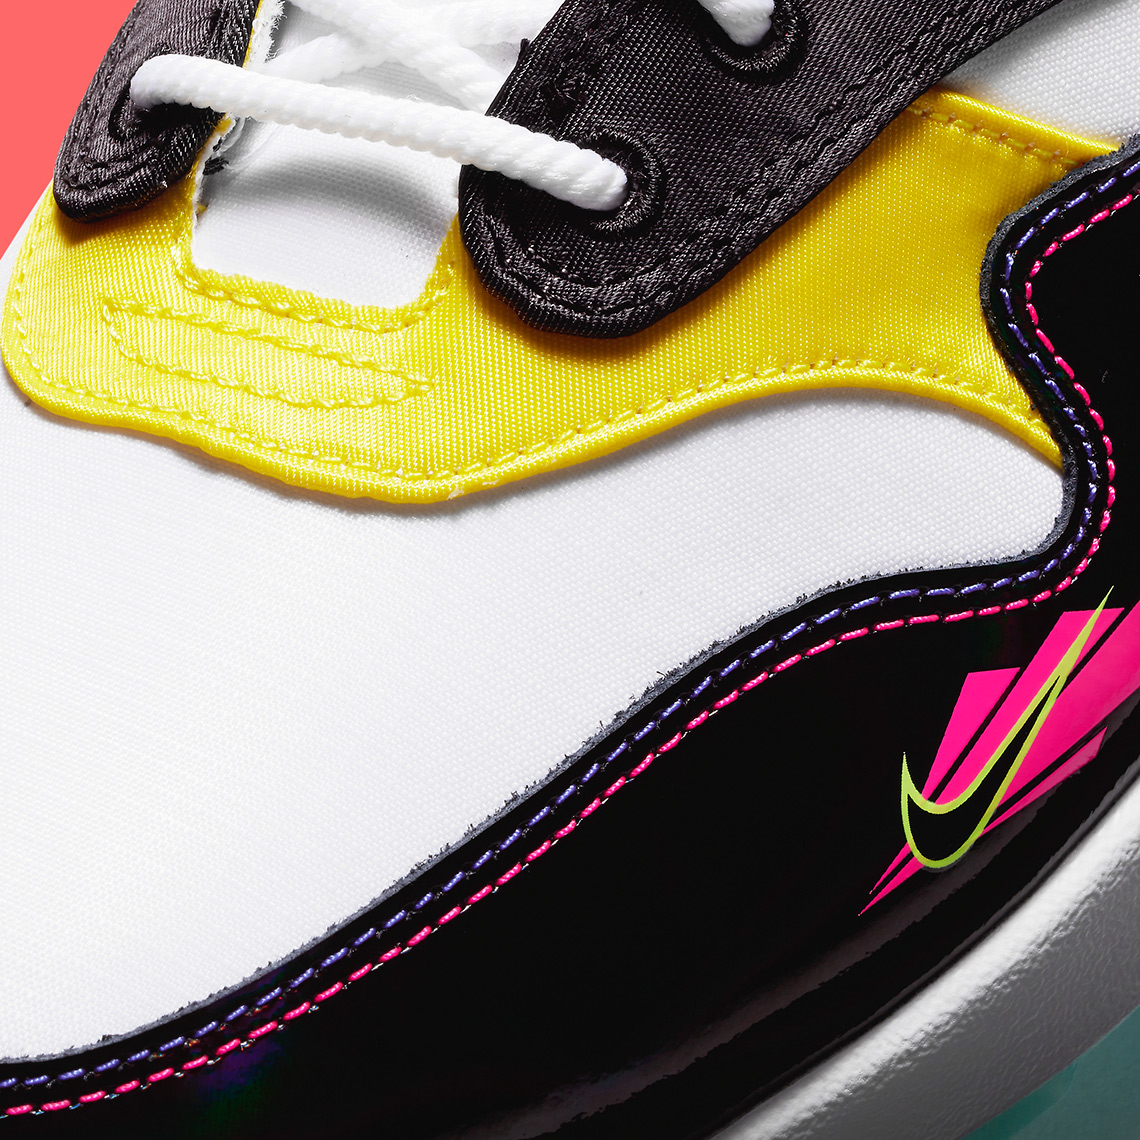 Nike Air Max 1 Hyper Pink